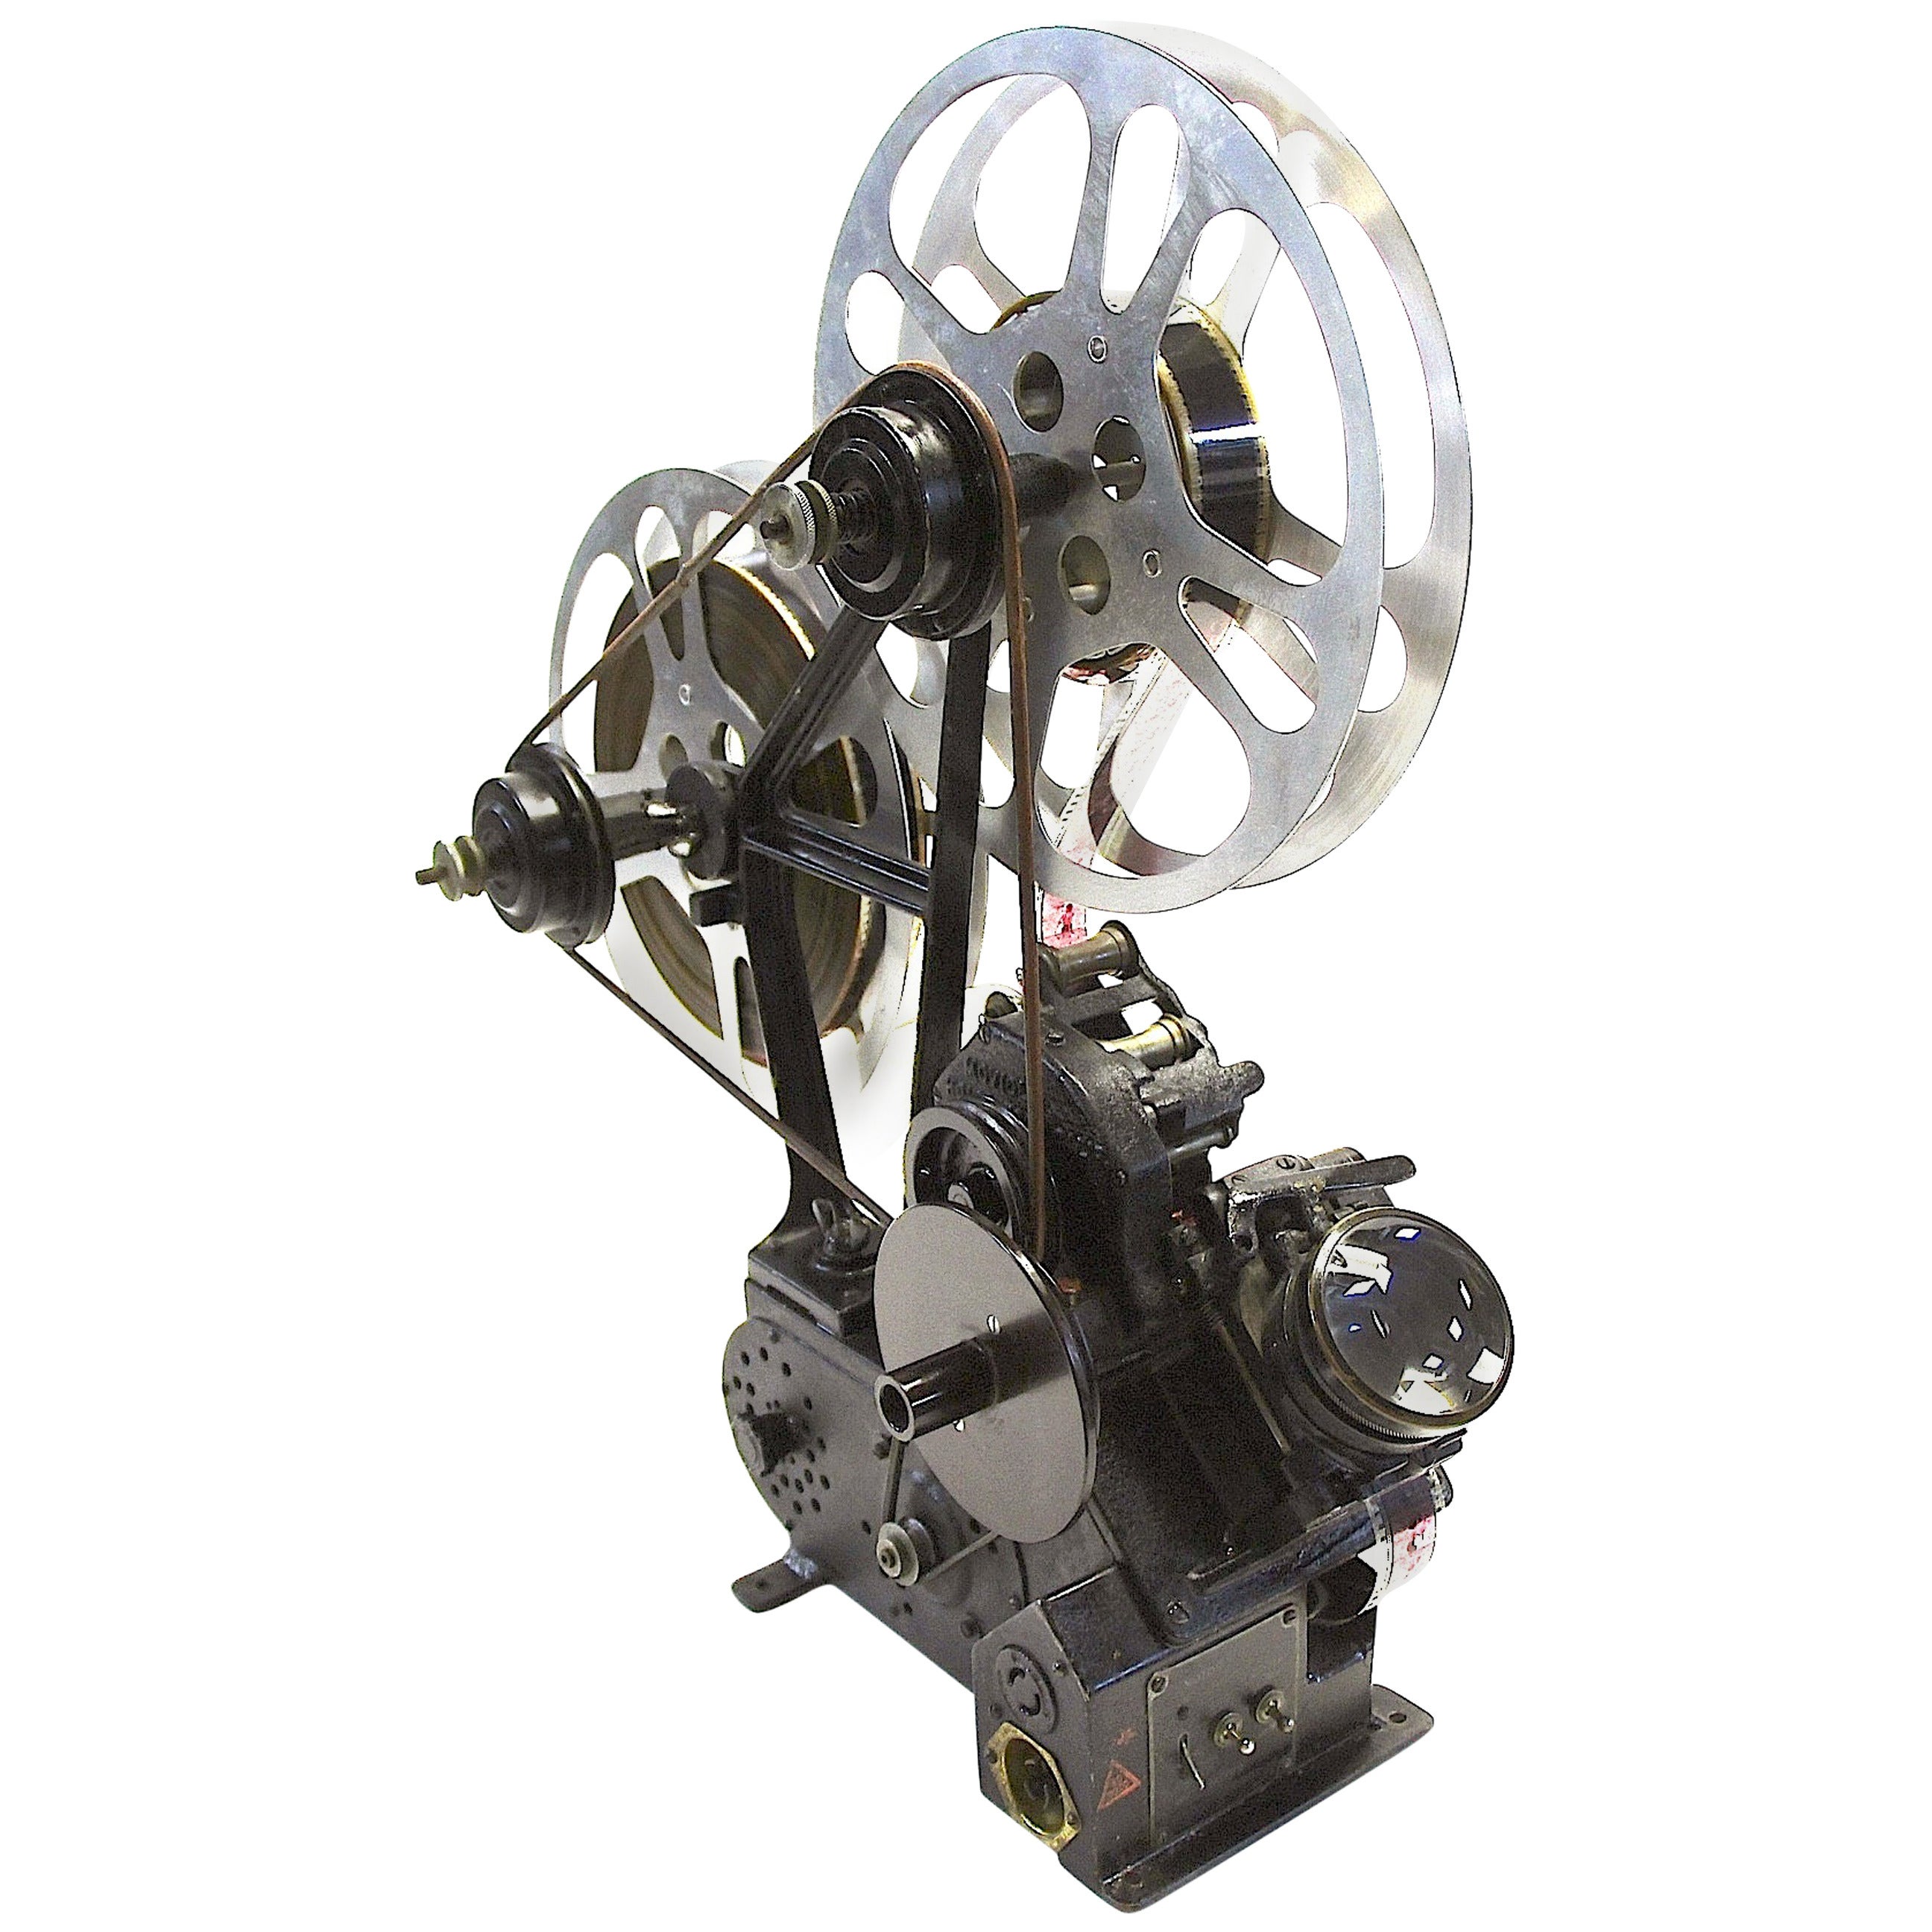 Moviola Bullseye Film Editing Viewer Designed 1919 Built in 1932, Sculpture For Sale